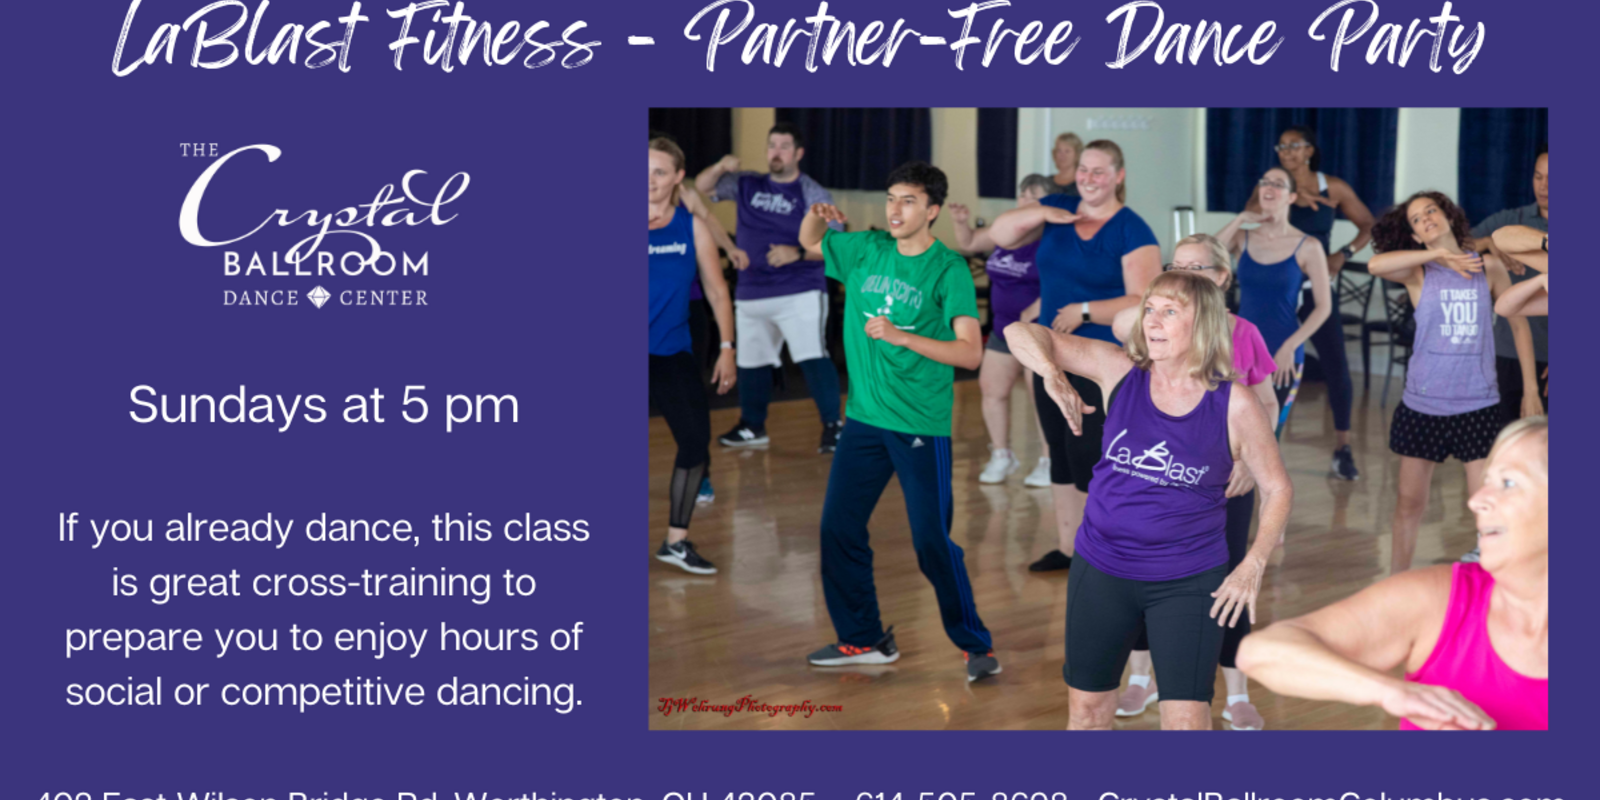 LaBlast Fitness - Partner-Free Dance Party